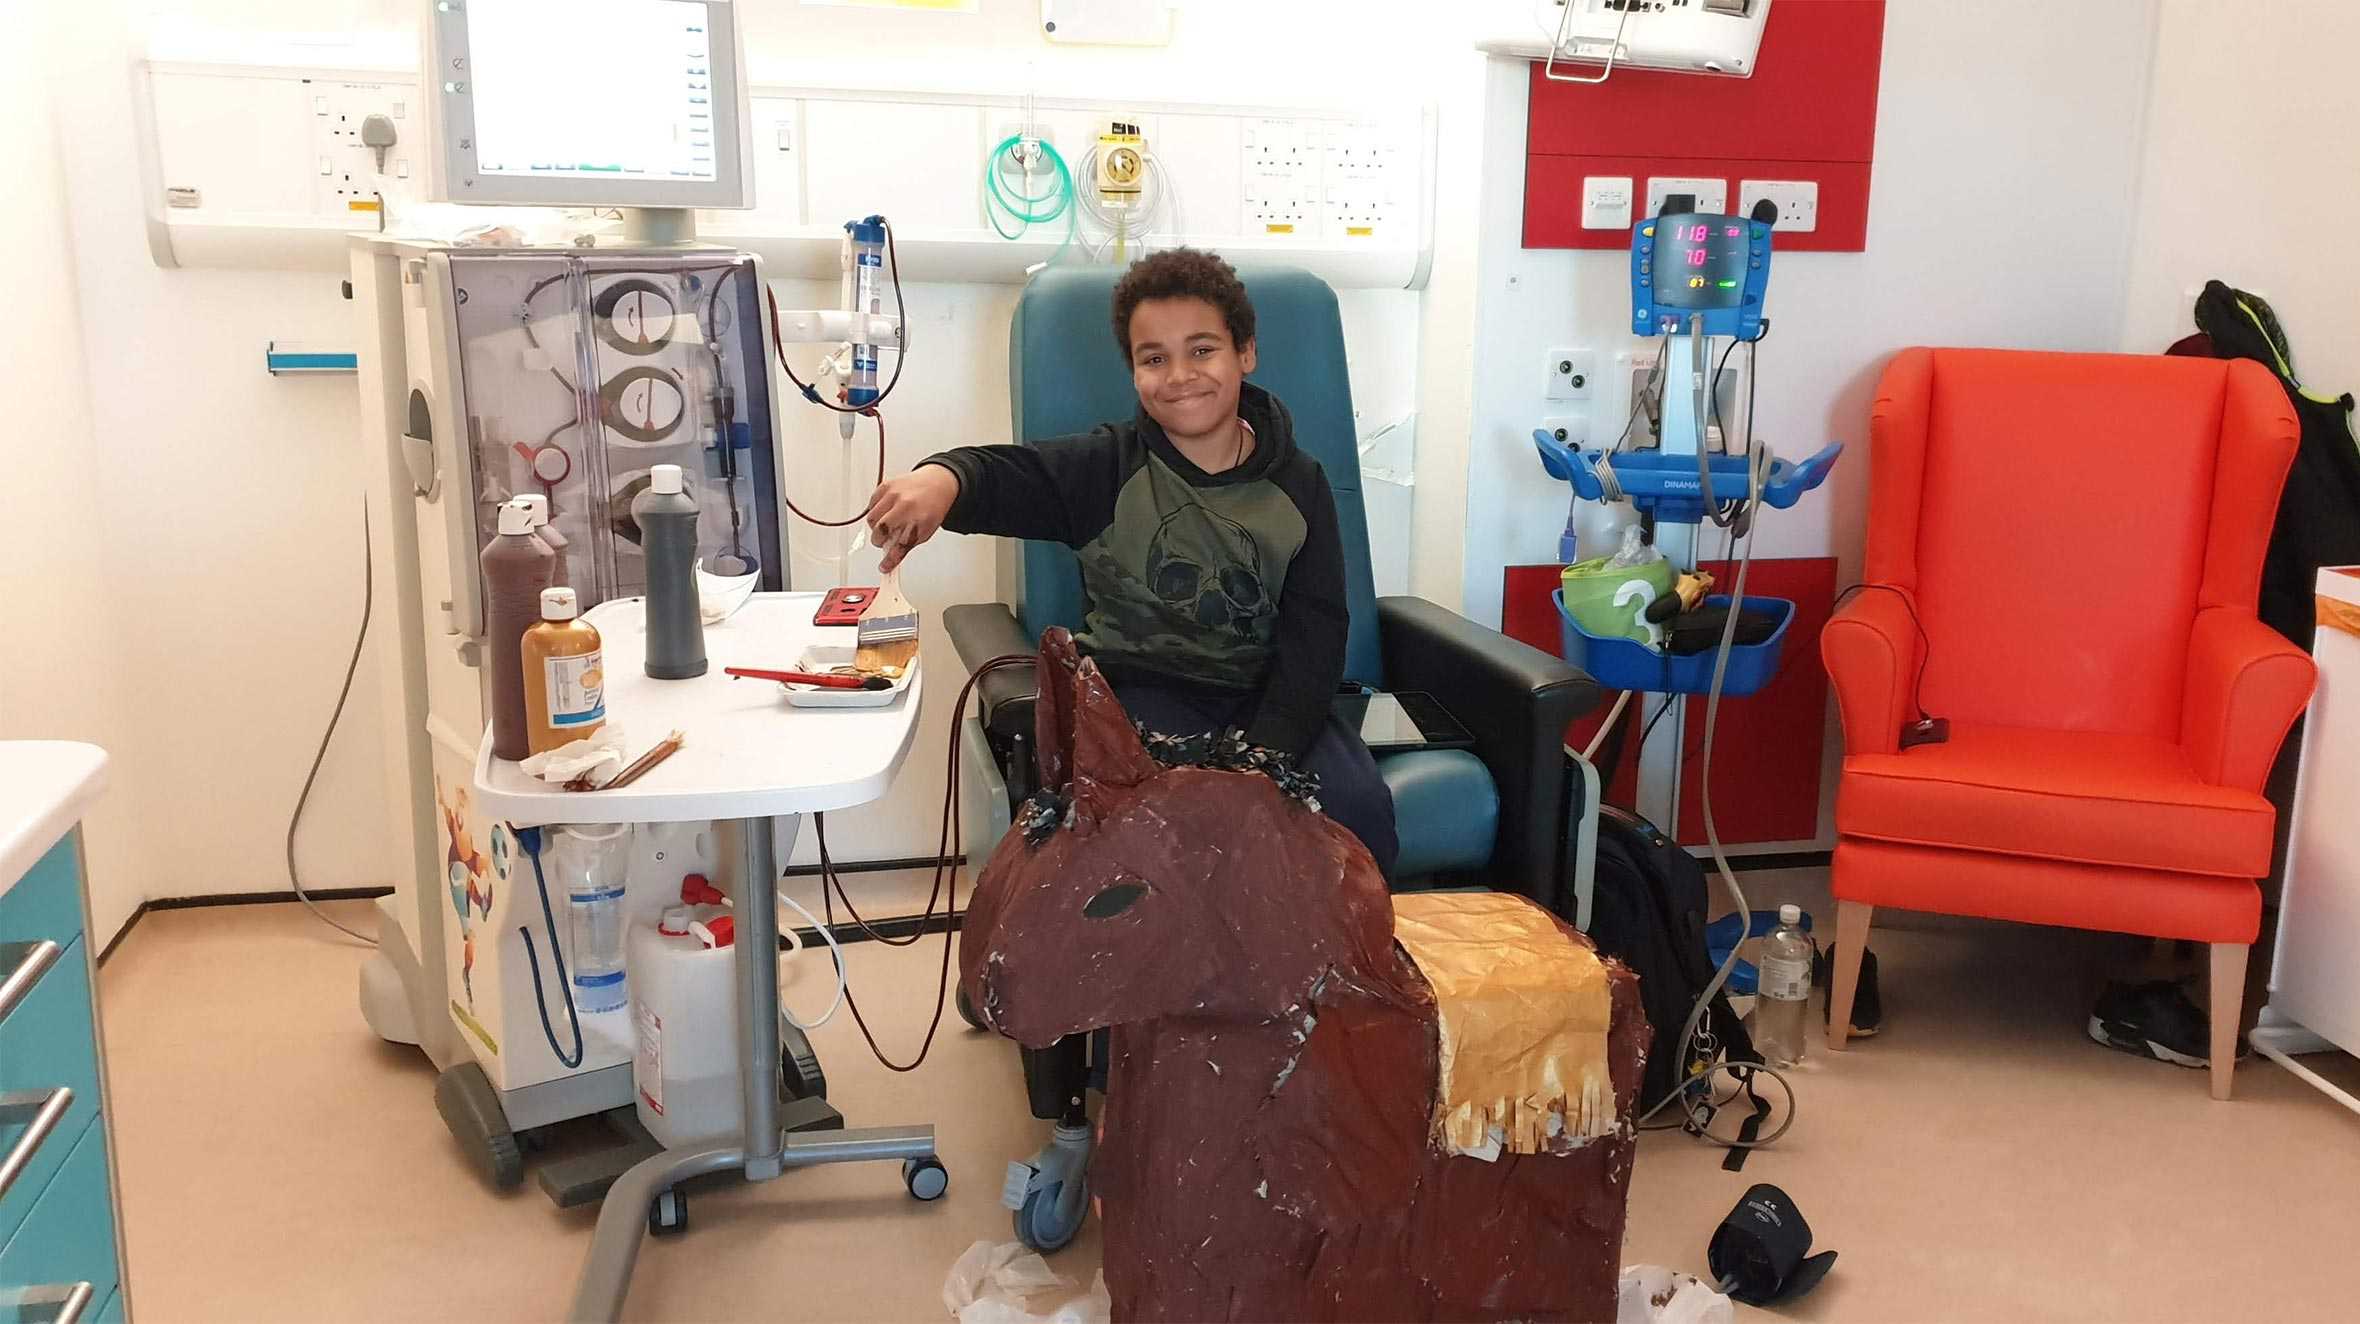 Lukasz, undergoing dialysis in hospital.